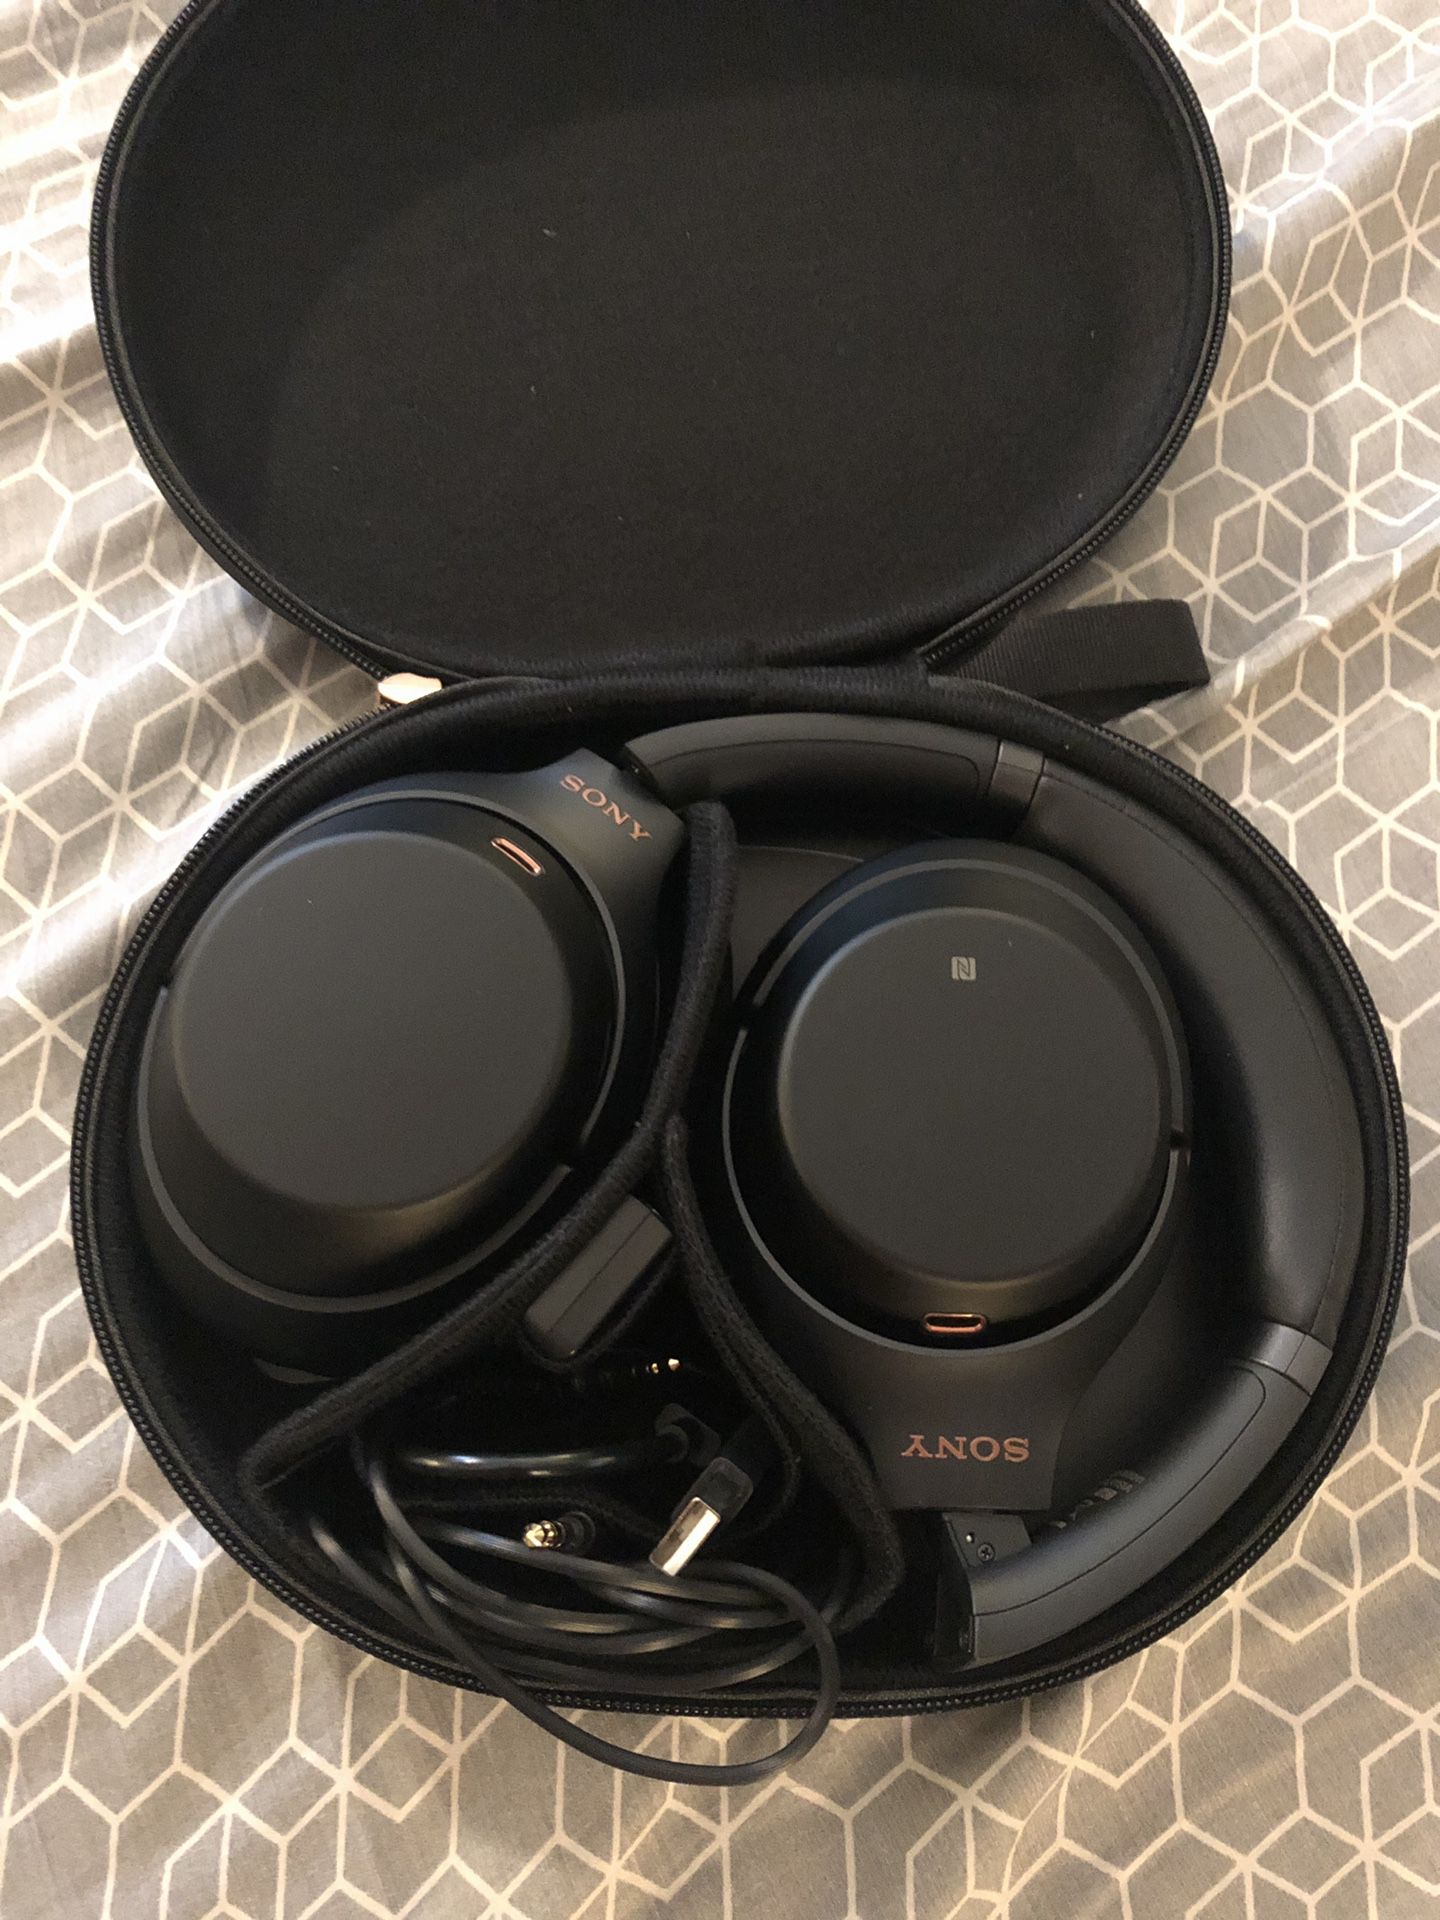 Sony WH-1000XM3 noise cancelling headphones.